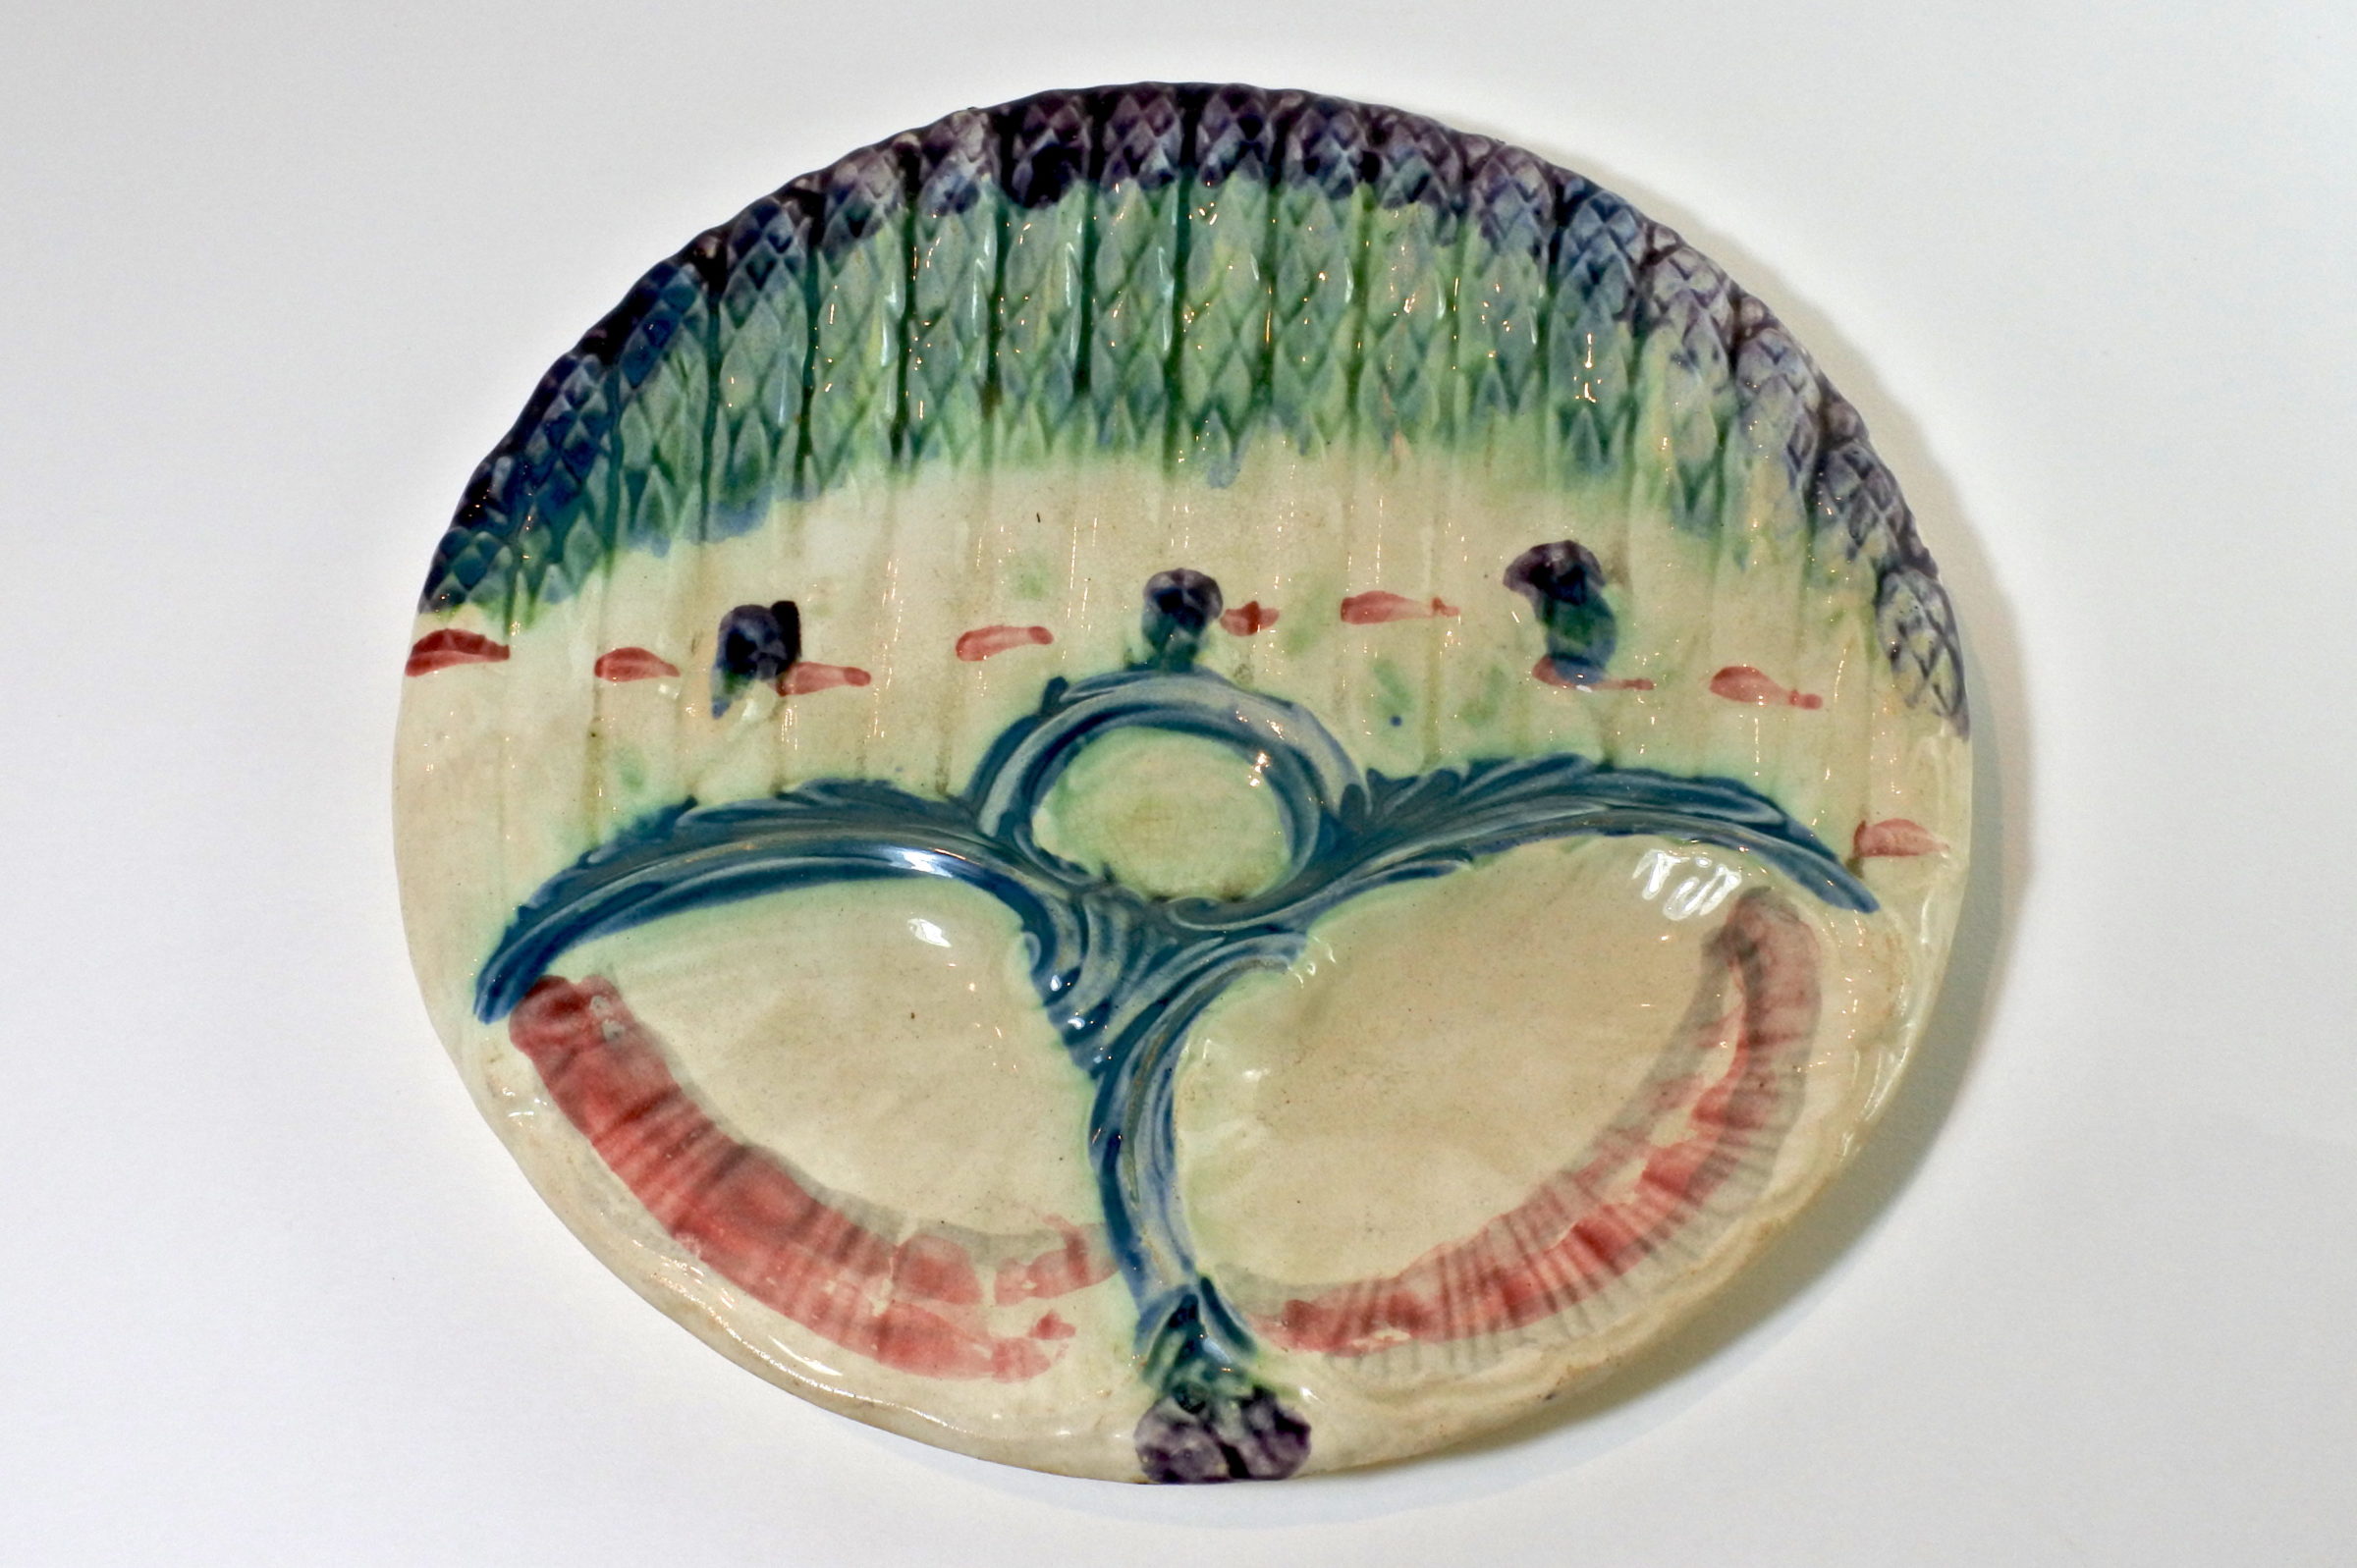 Piatto in ceramica barbotine per asparagi - Lunéville - policromo